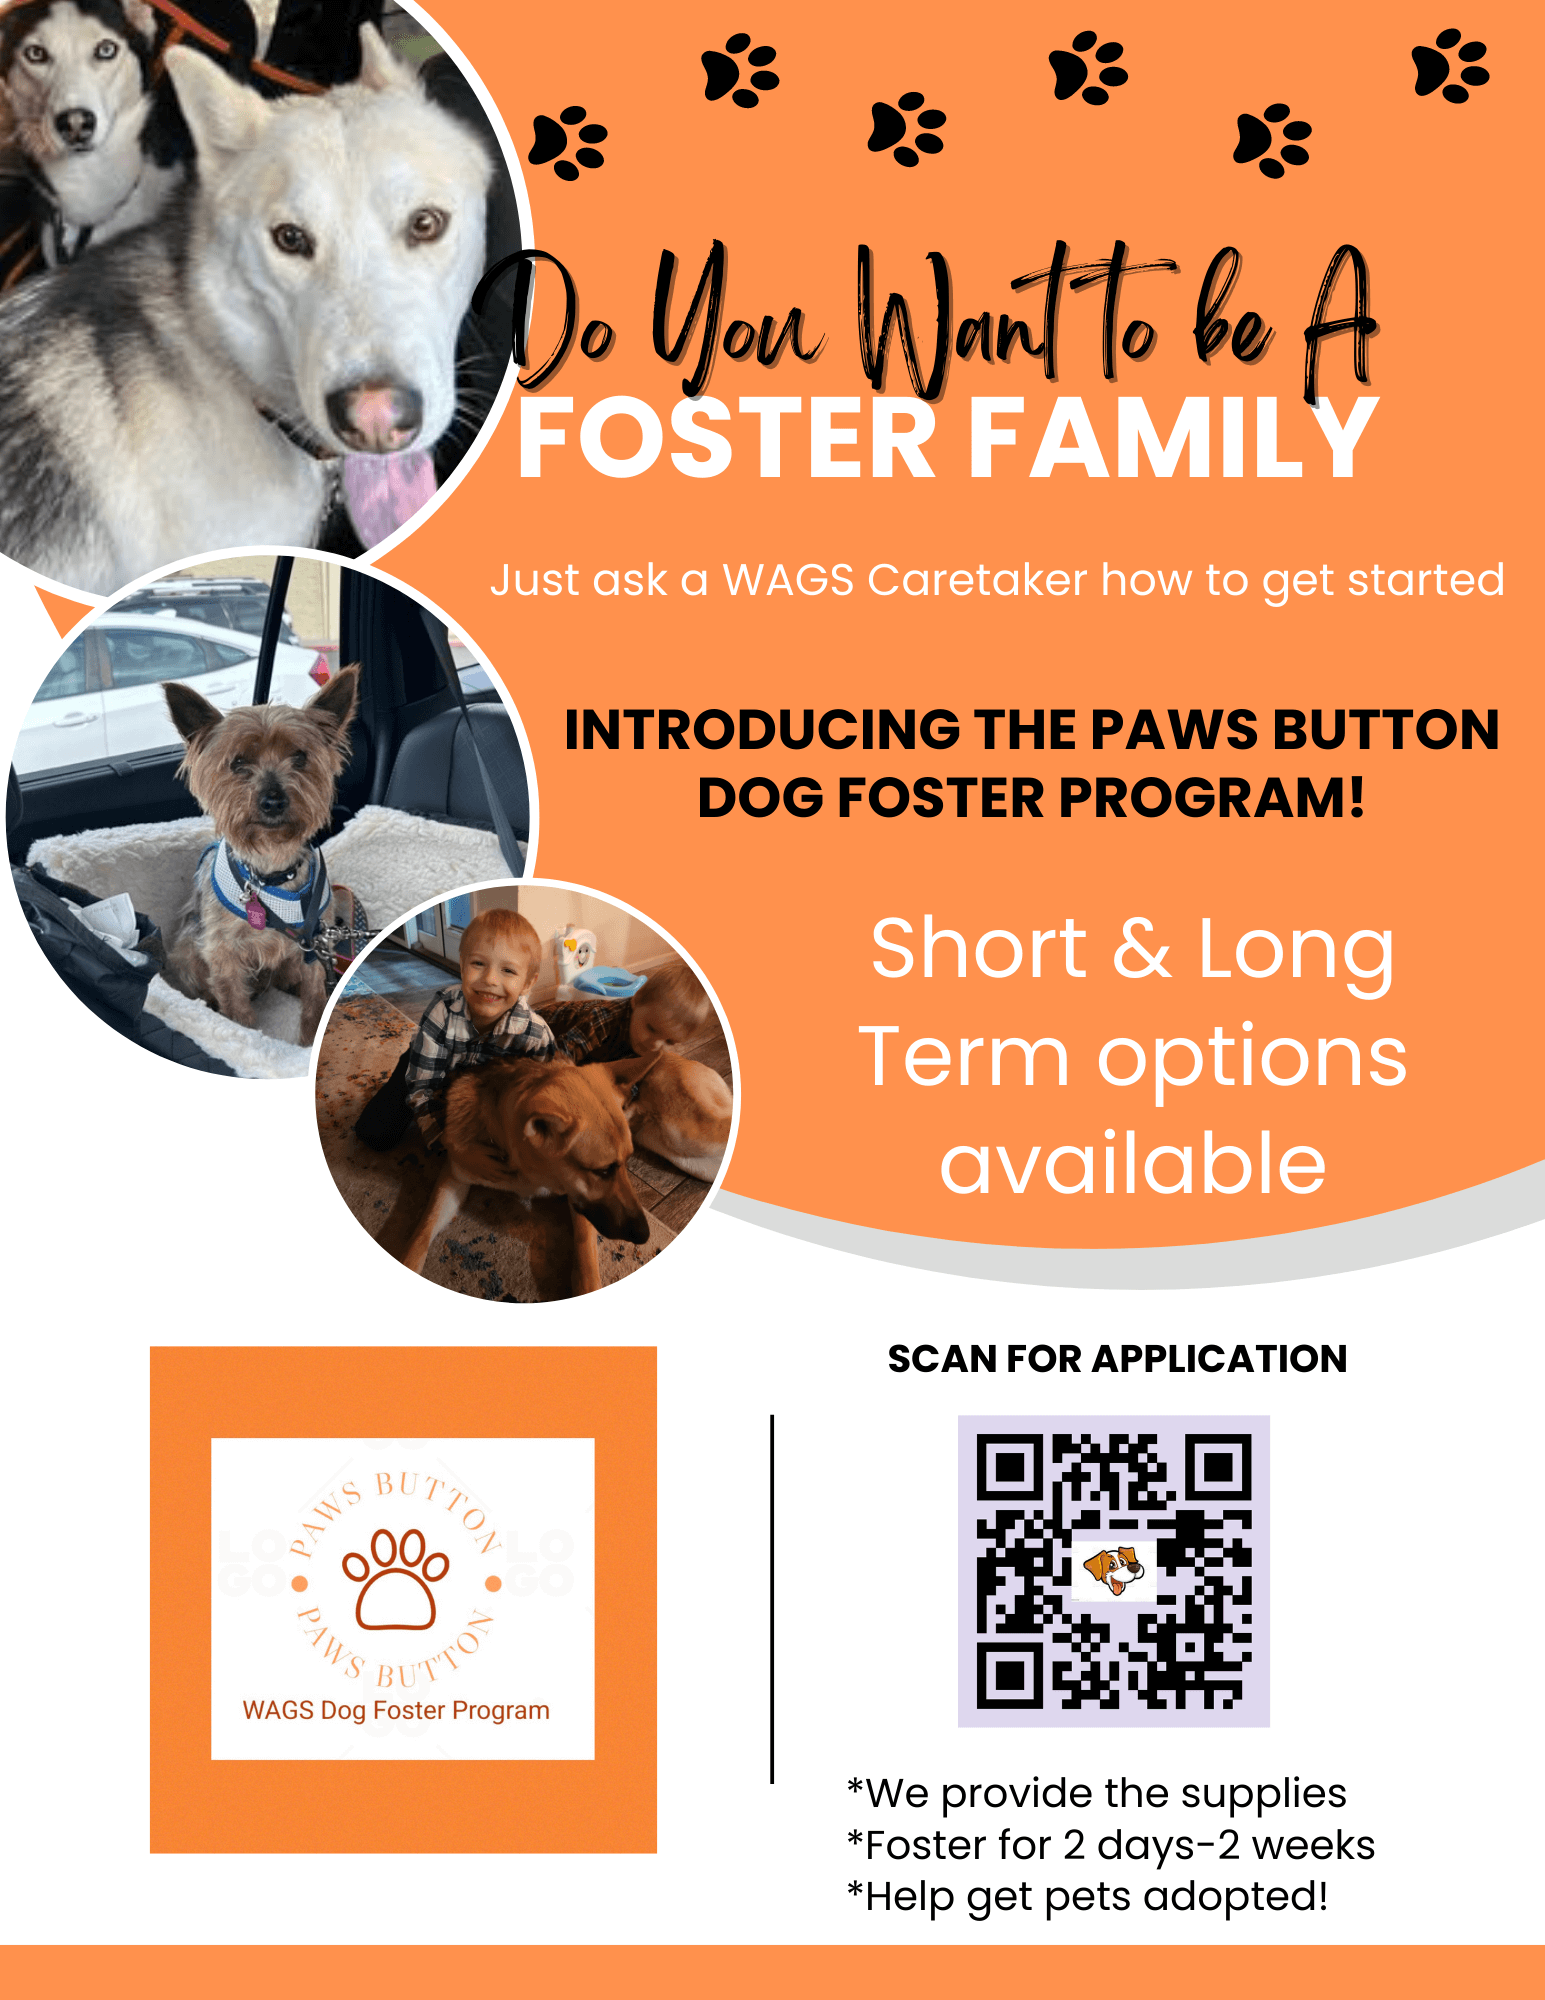 Paws Button Dog Foster Program